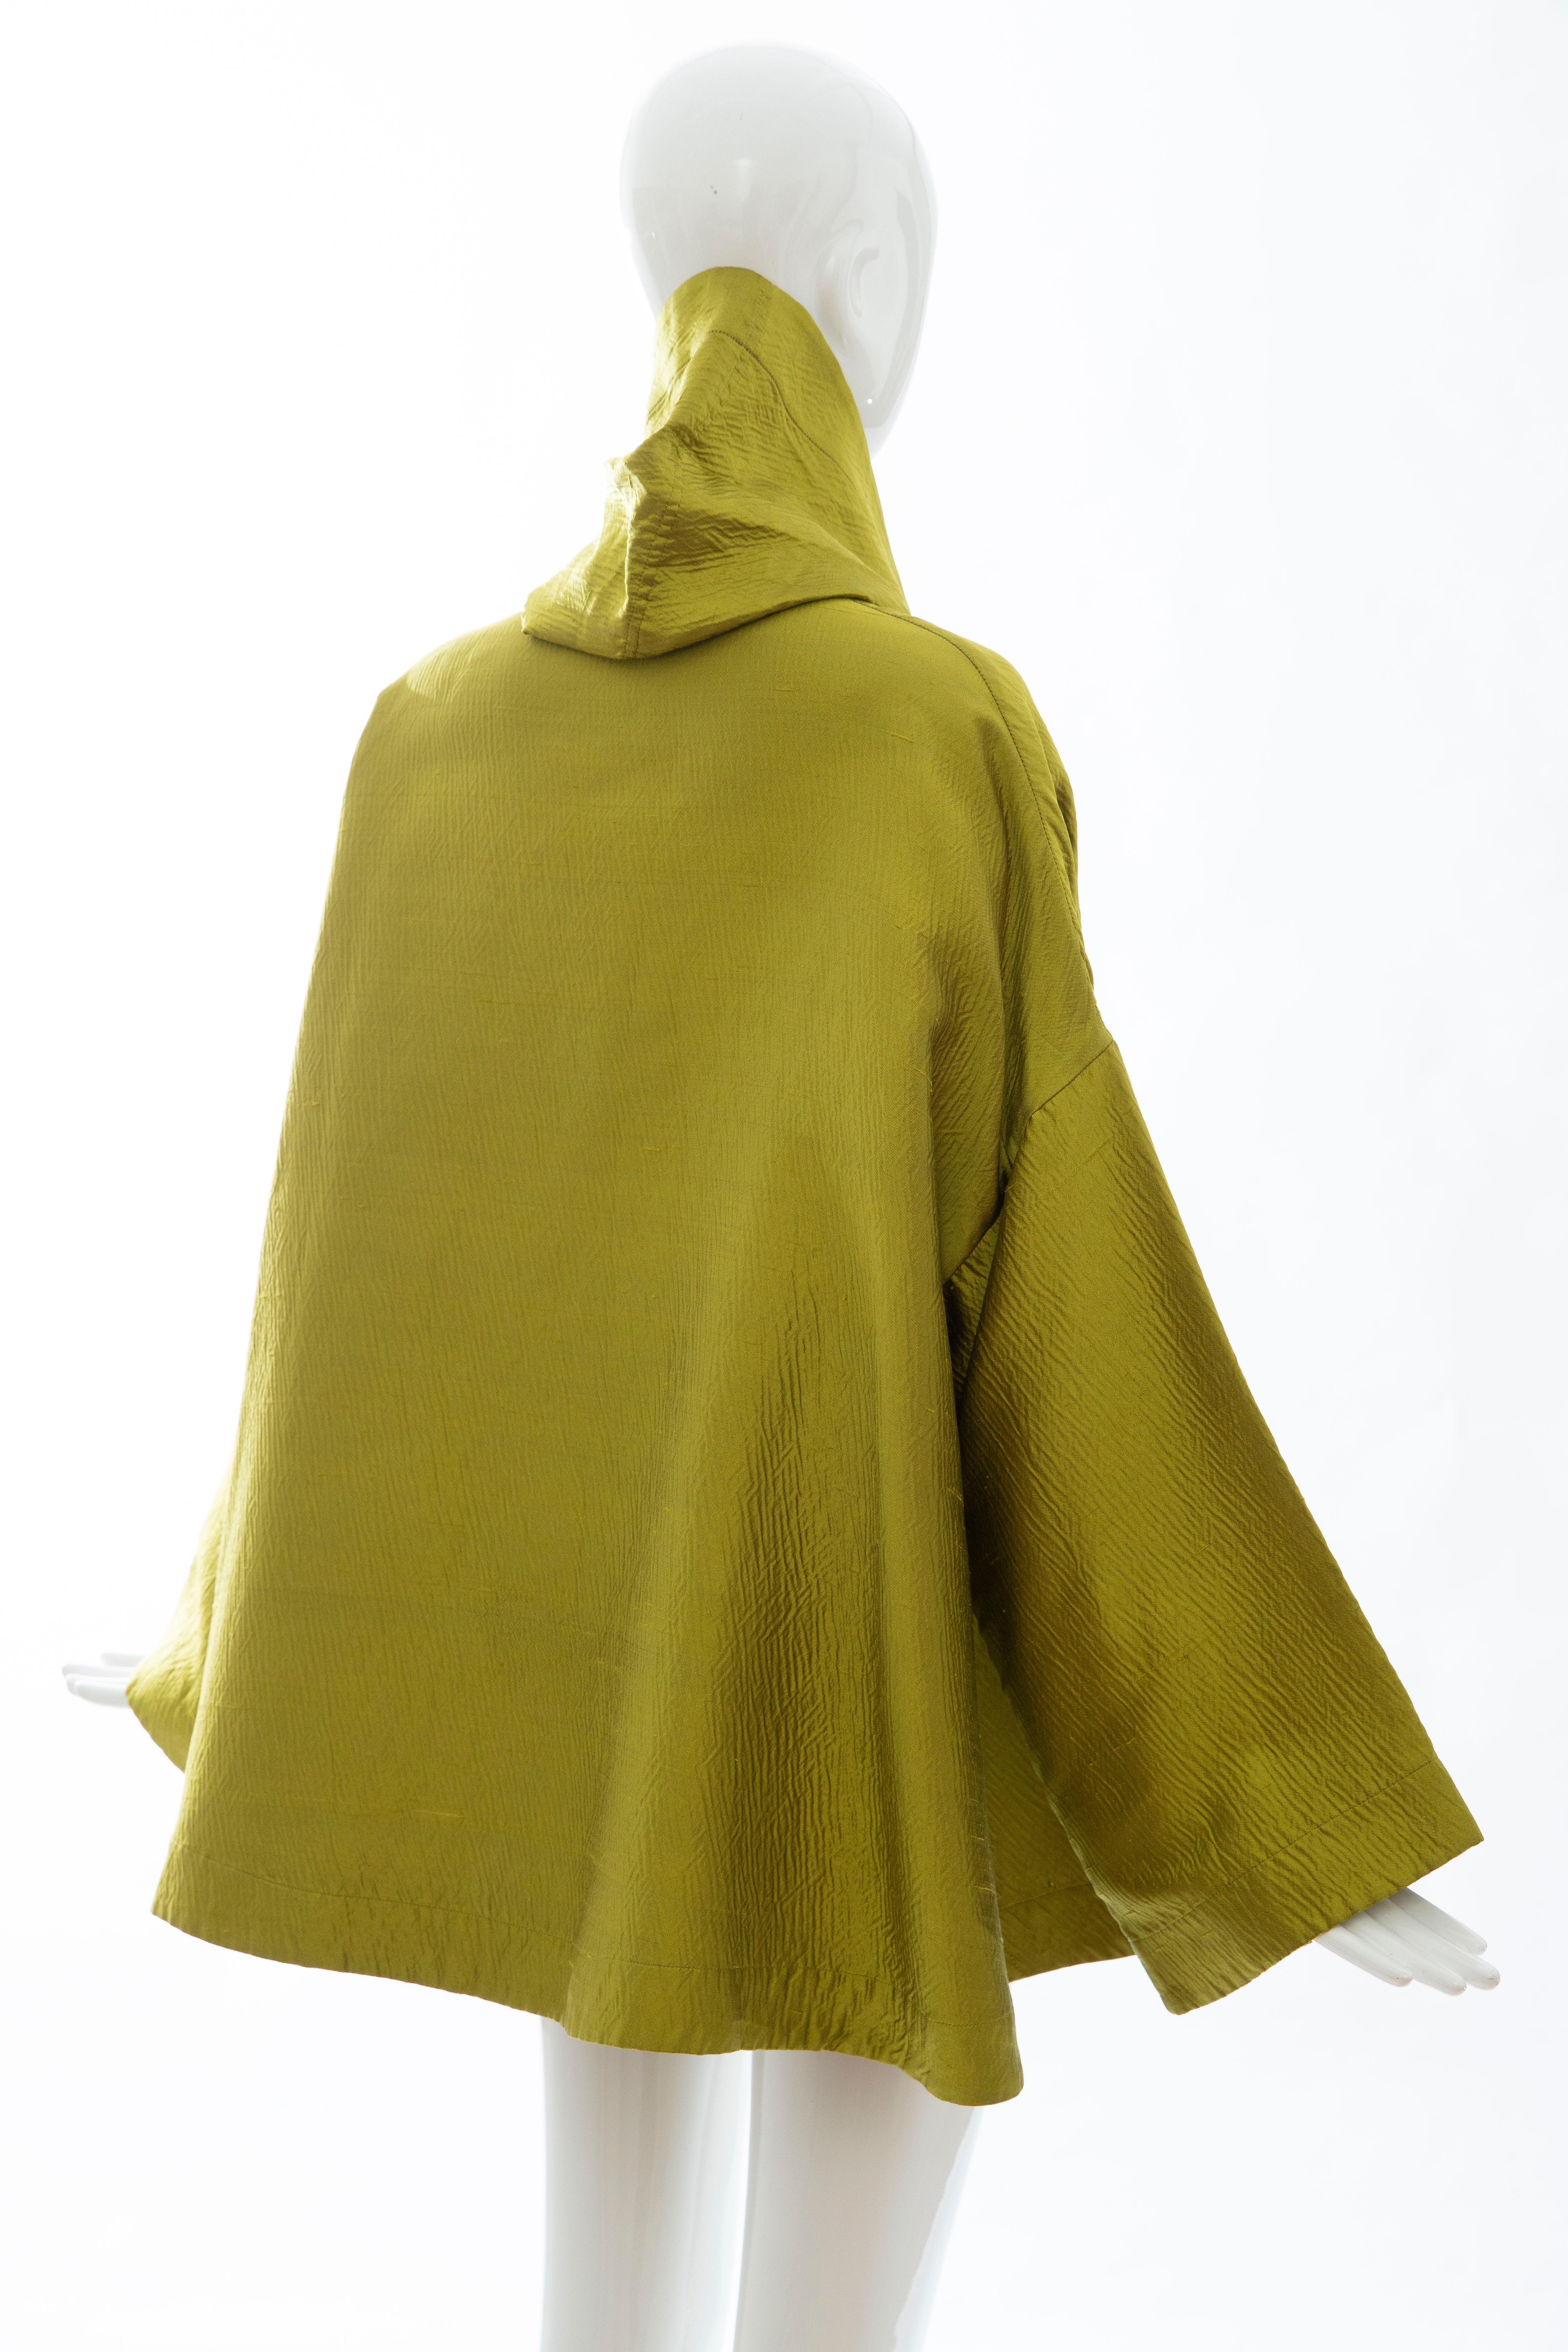 Romeo Gigli Runway Silk Cotton Chartreuse Green Evening Jacket, Fall 1991 3